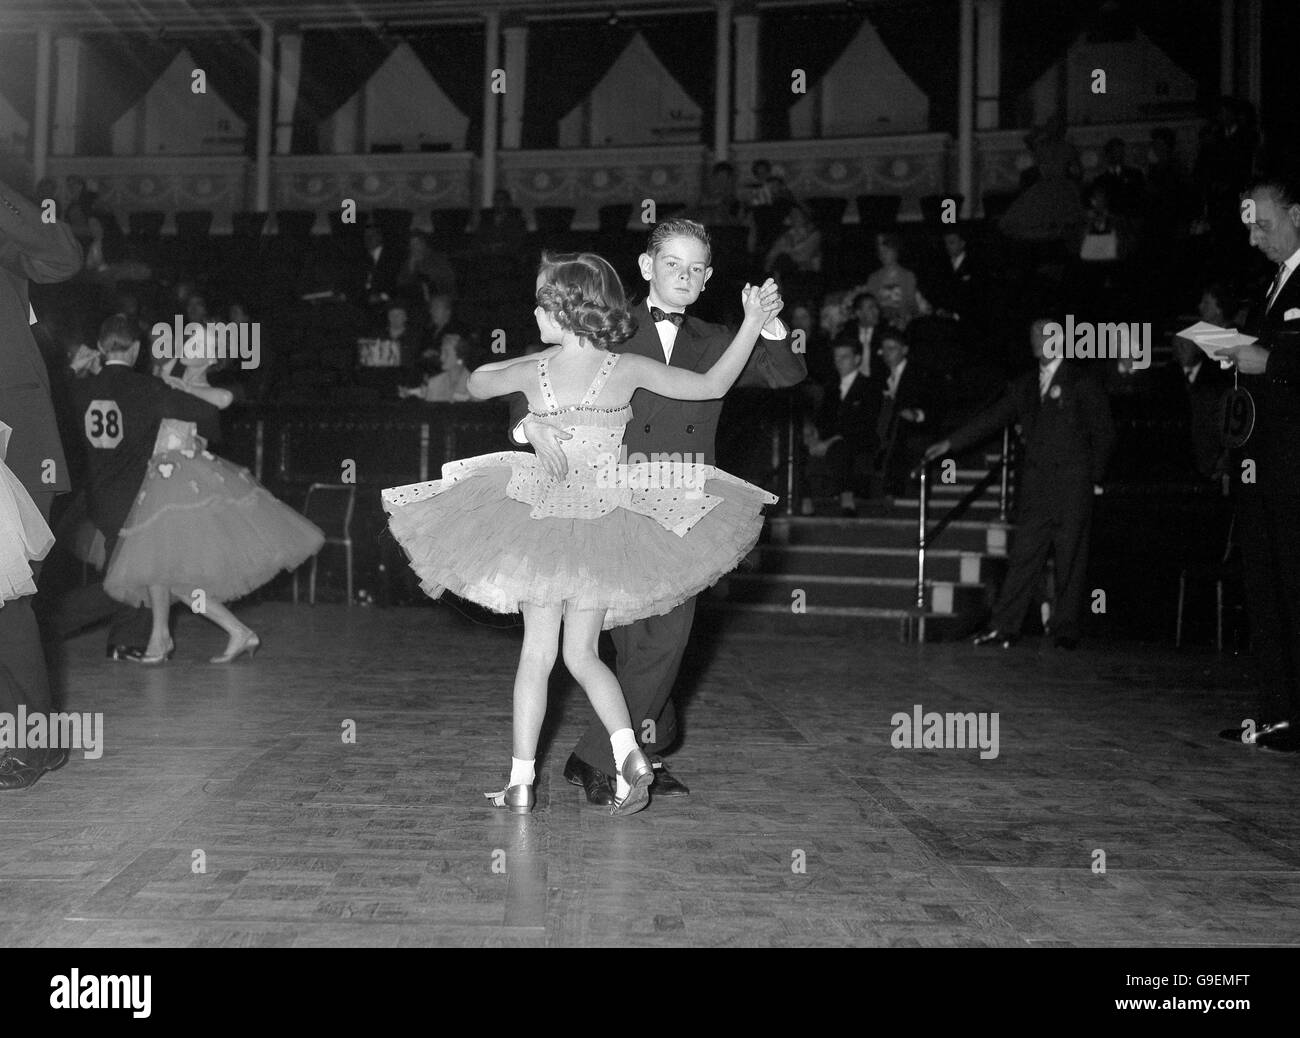 Dancing - International Ballroom Dancing Championships - Albert Hall. Madeline Audrey and Terry Sharwood strut their stuff on the dancefloor Stock Photo